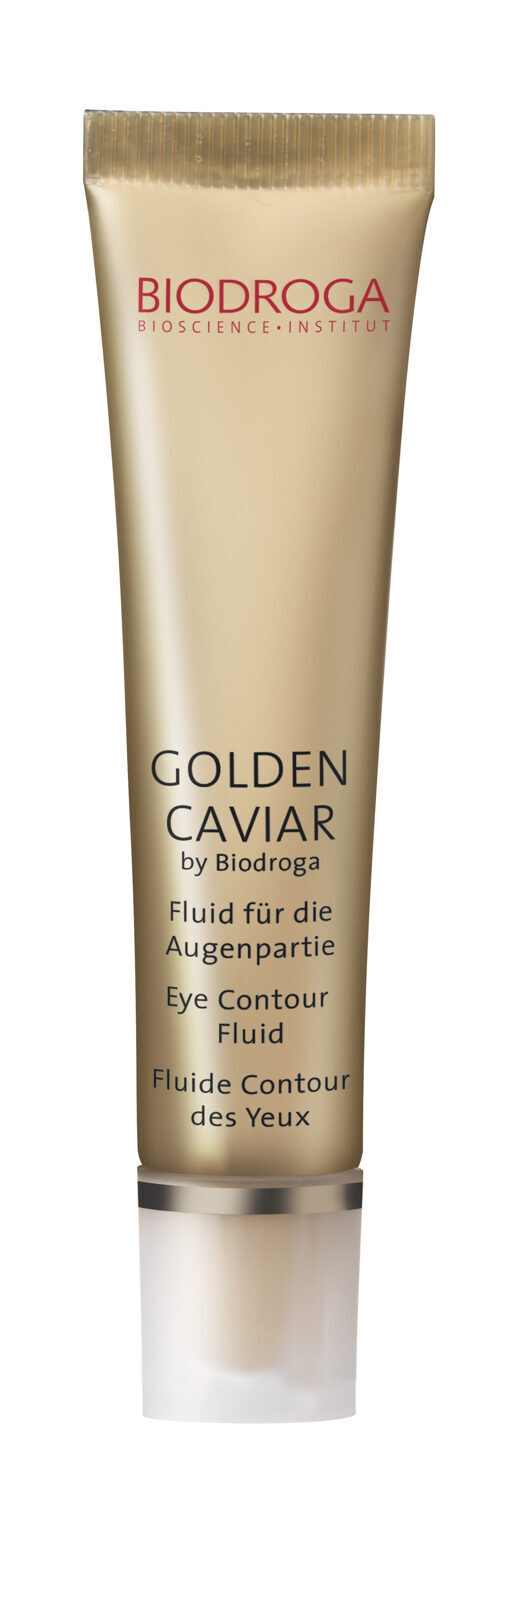 BIODROGA Golden Caviar Geschenkset für trockene Haut